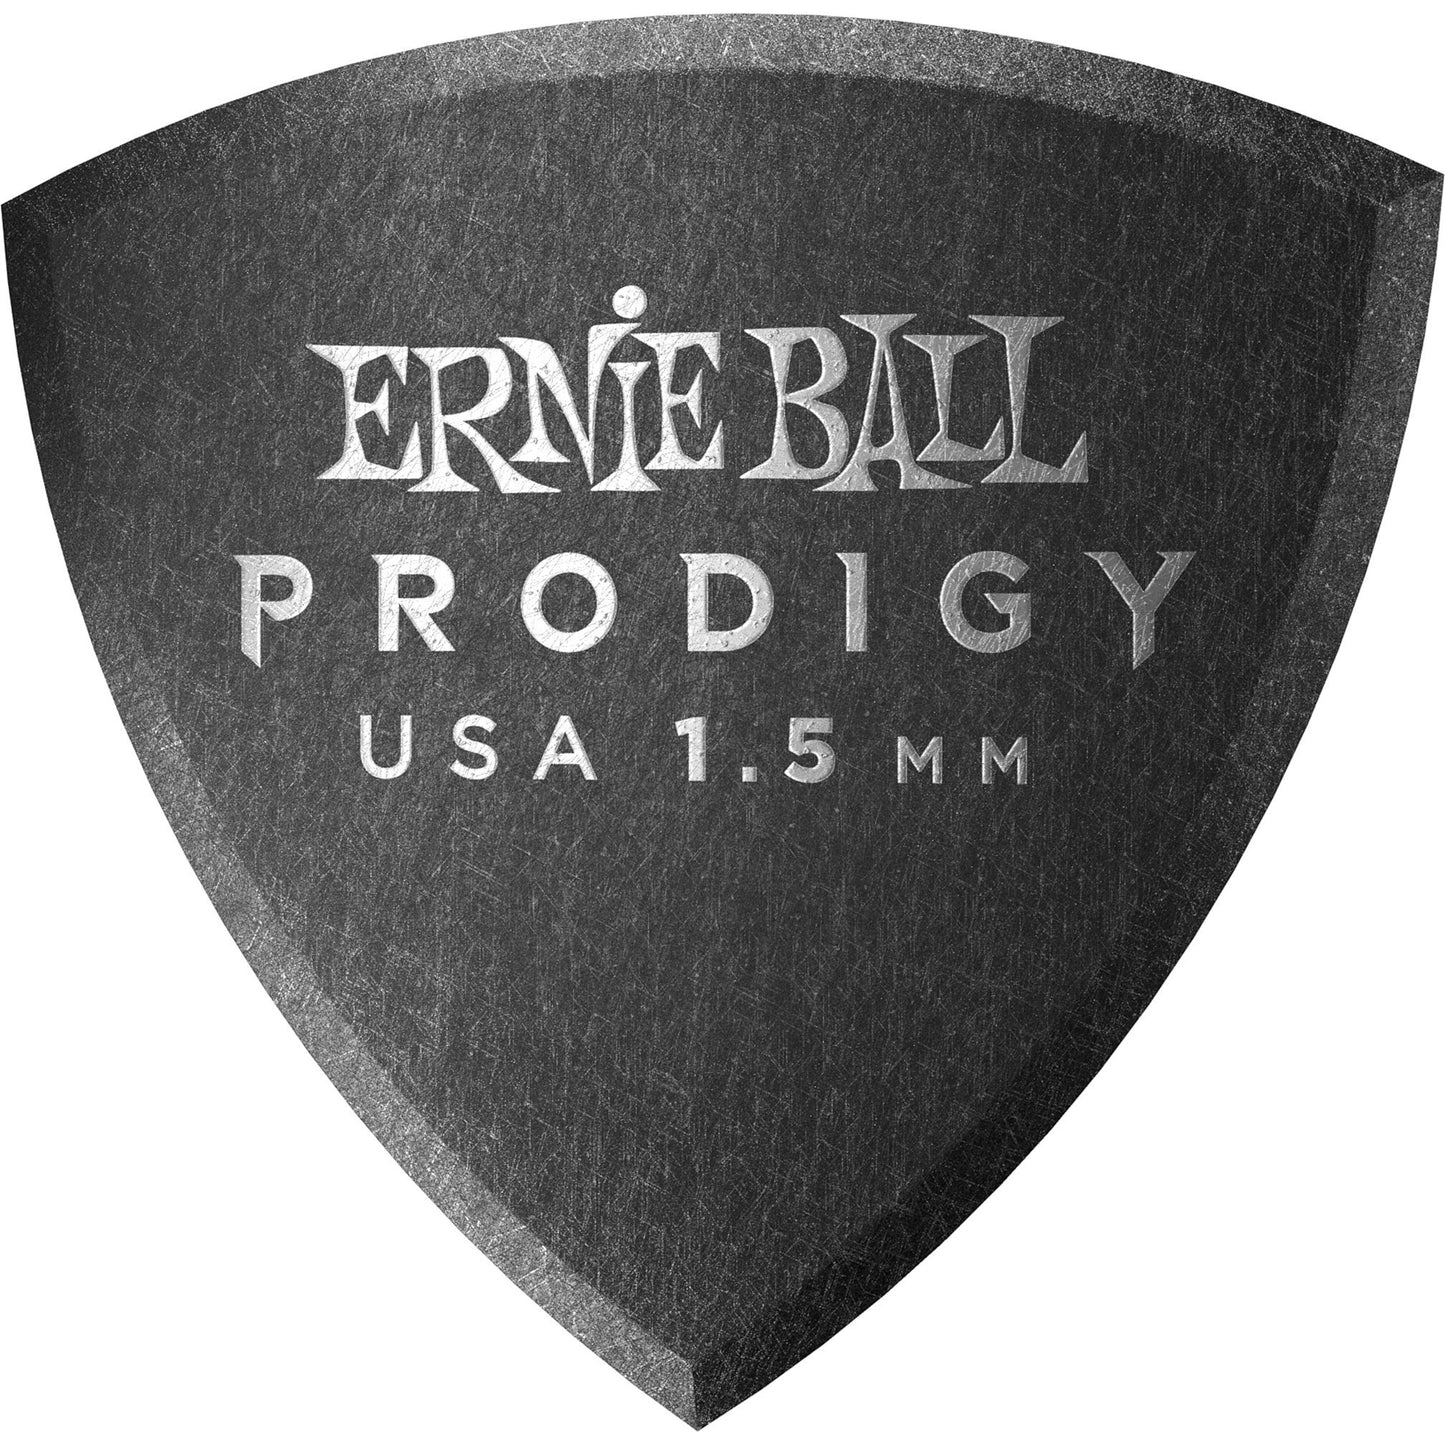 Ernie Ball Prodigy Shield Guitar Picks (6-Pack), Black, 1.5mm